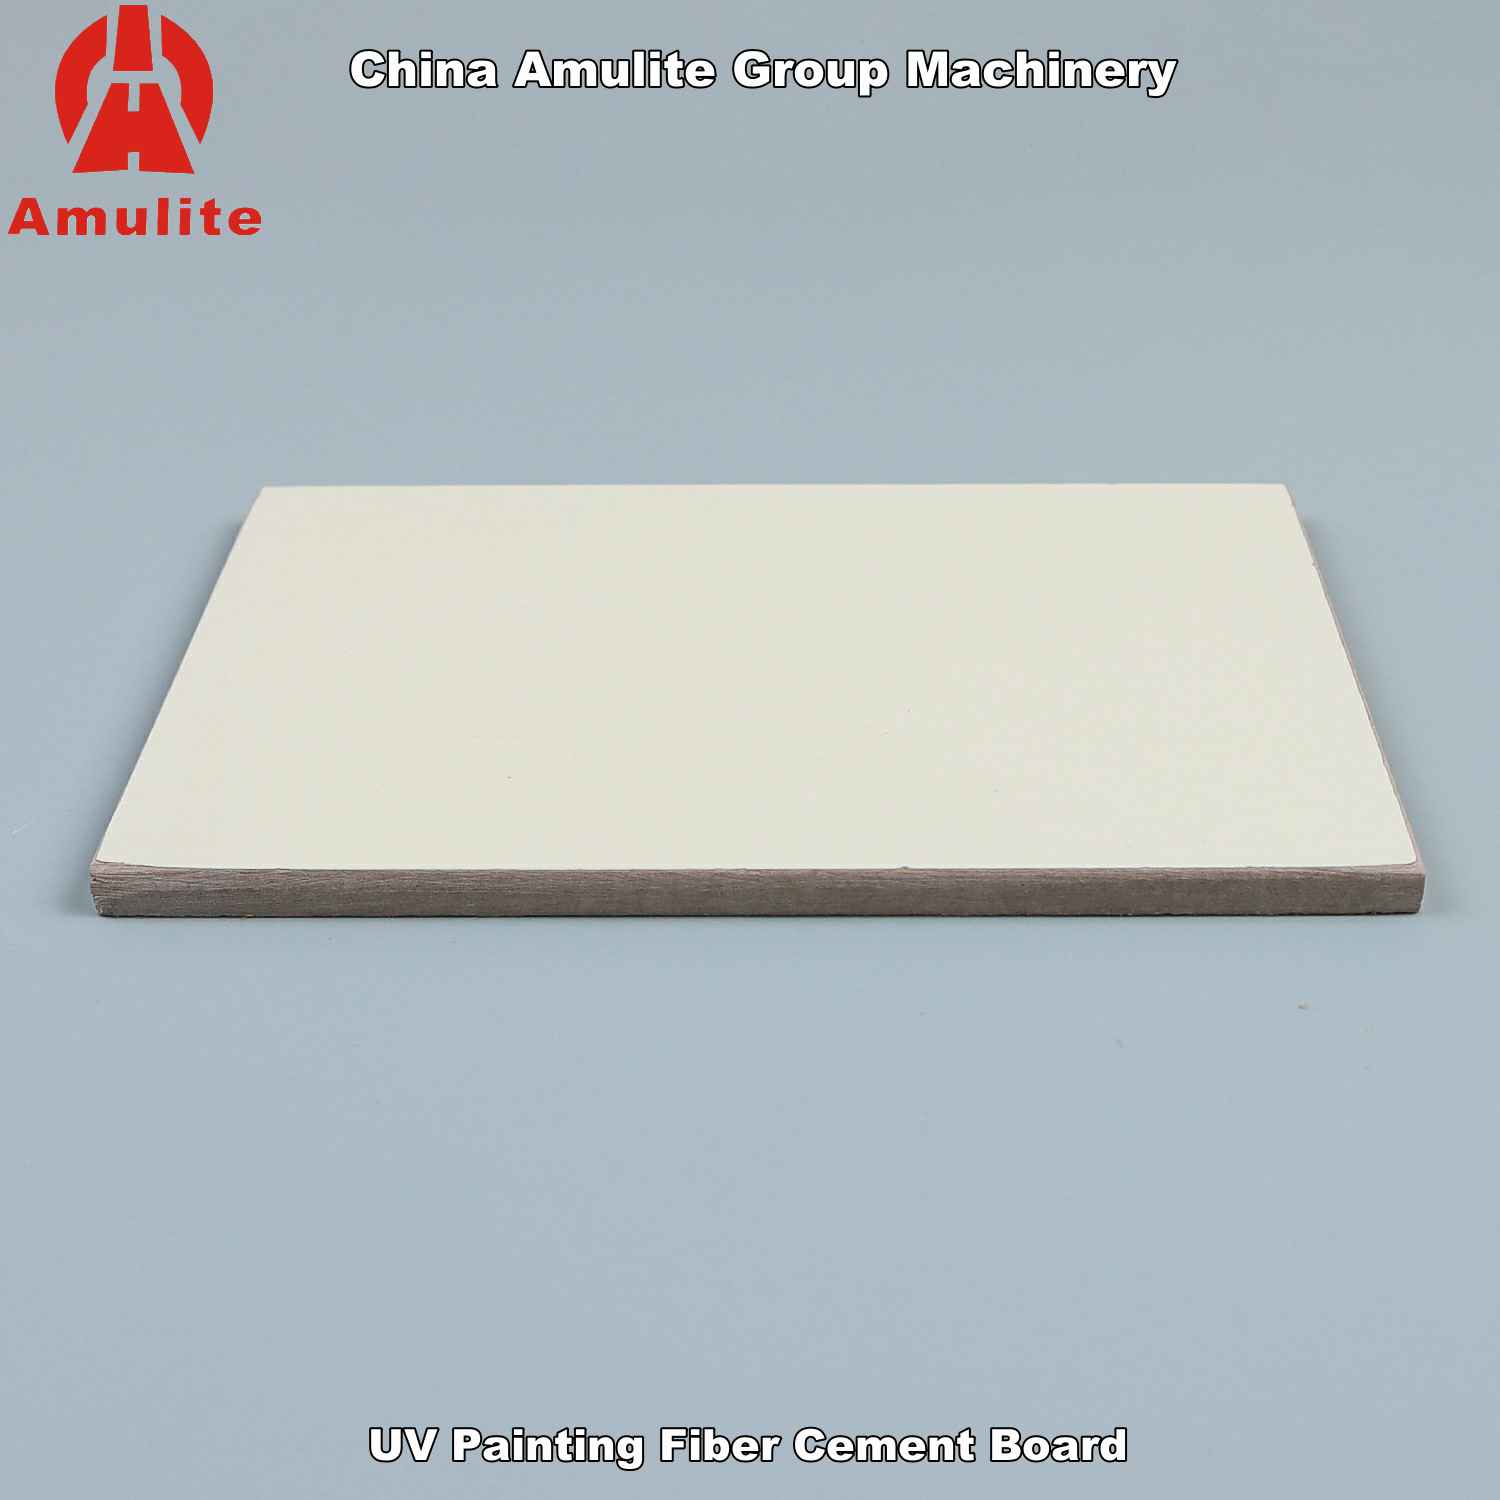 UV Painting Fiber Cement Board (17)